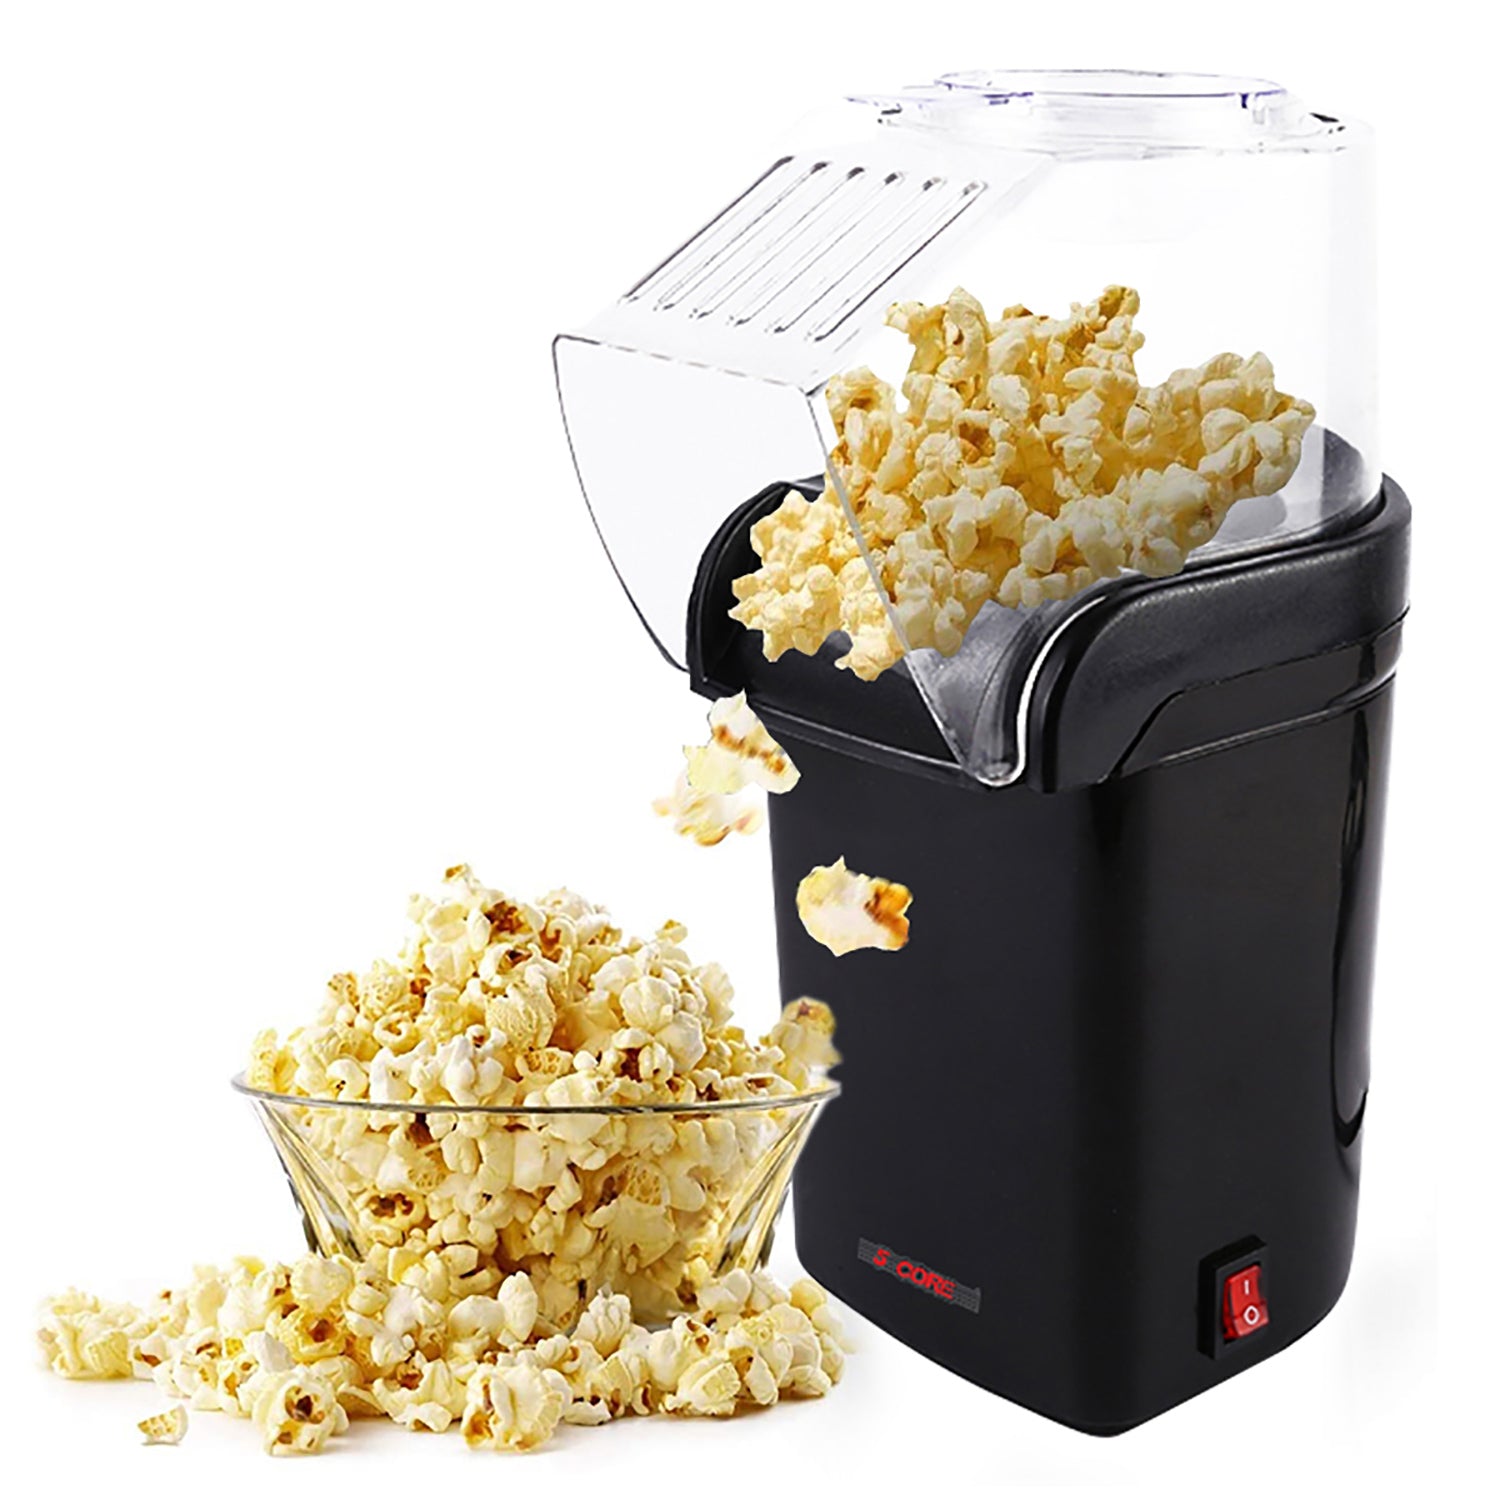 5Core Hot Air Popcorn Machine, 16 Cup, Electric Oil-Free Pop Corn Kernel Popper BPA-Free Food Safe Black